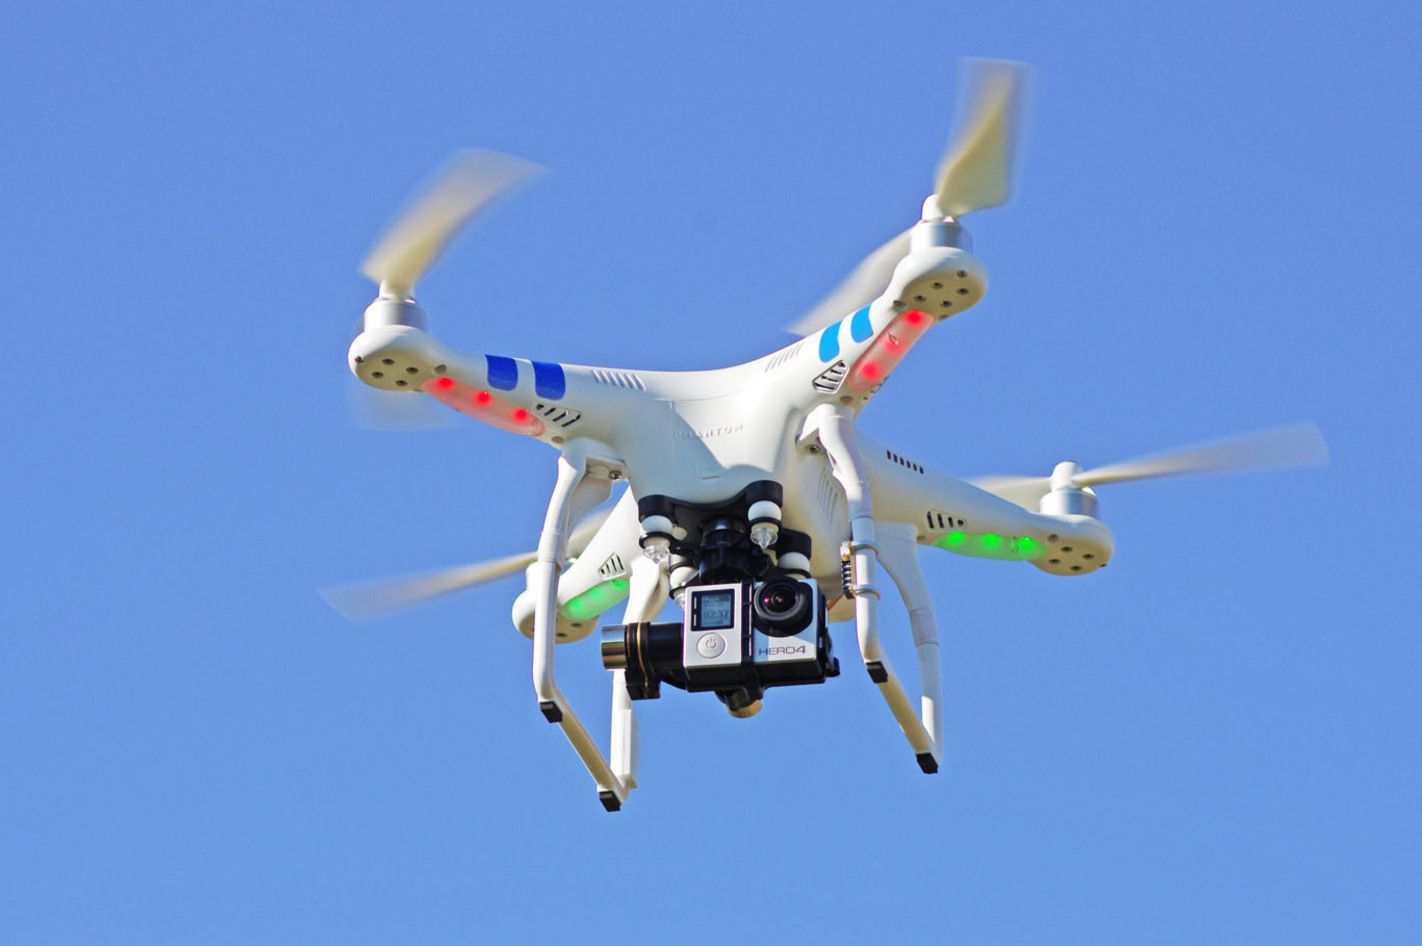 Quadrocopter-Drohne fliegen